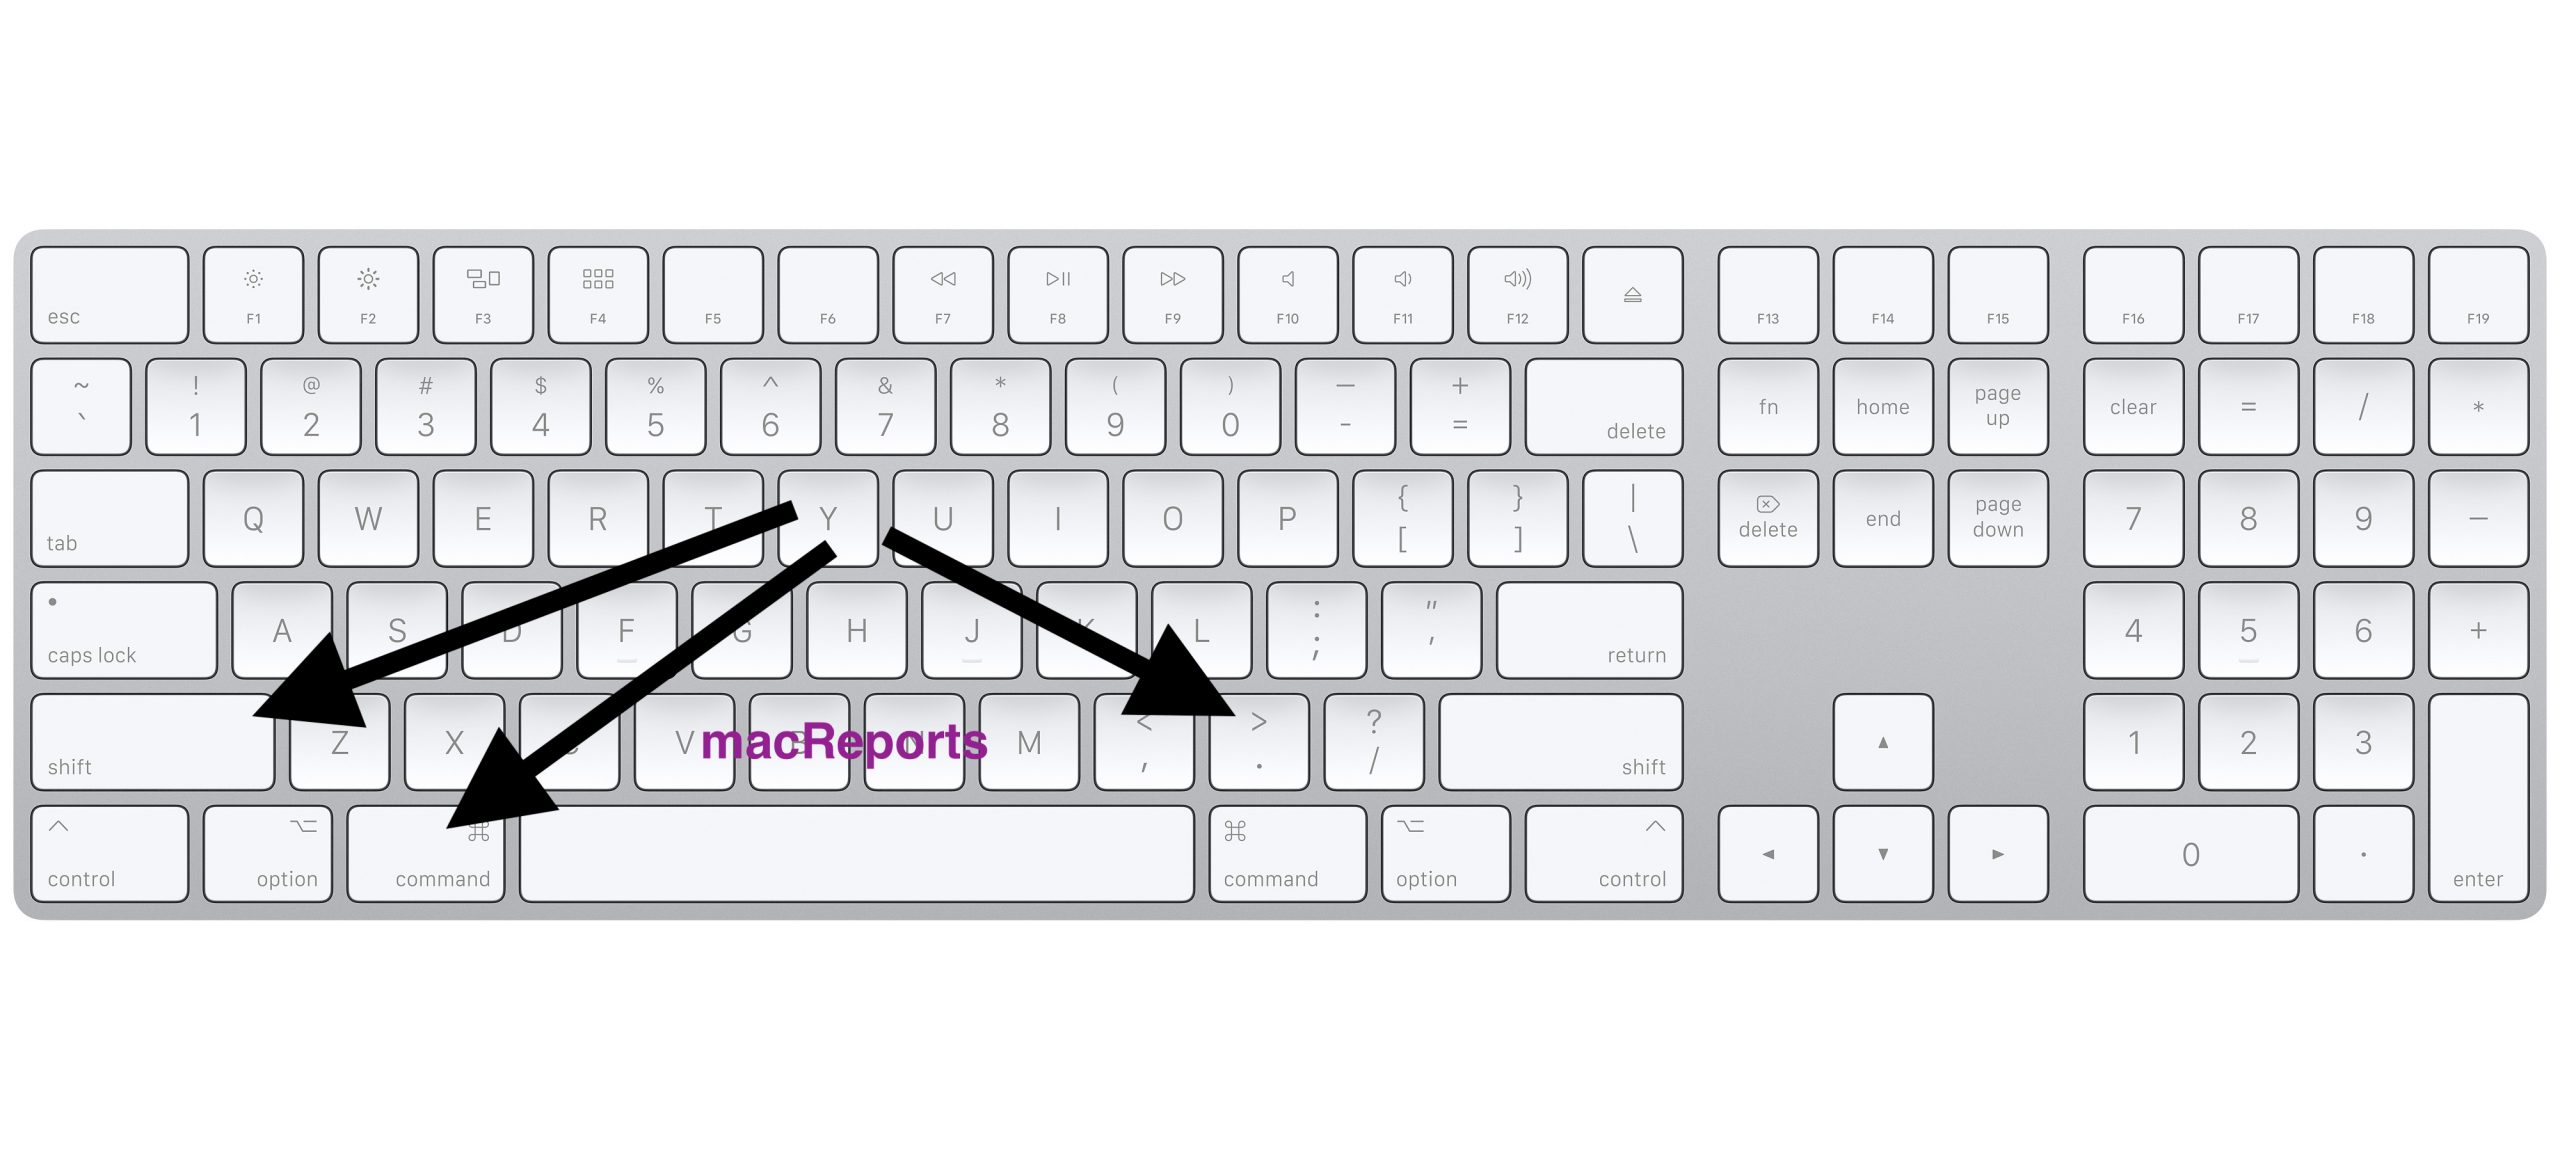 Кнопка command. Клавиша Command на Mac. Раскладка клавиатуры Мак на виндовс. Shift + option _cmd+r на клавиатуре. Кнопка option на макбук.